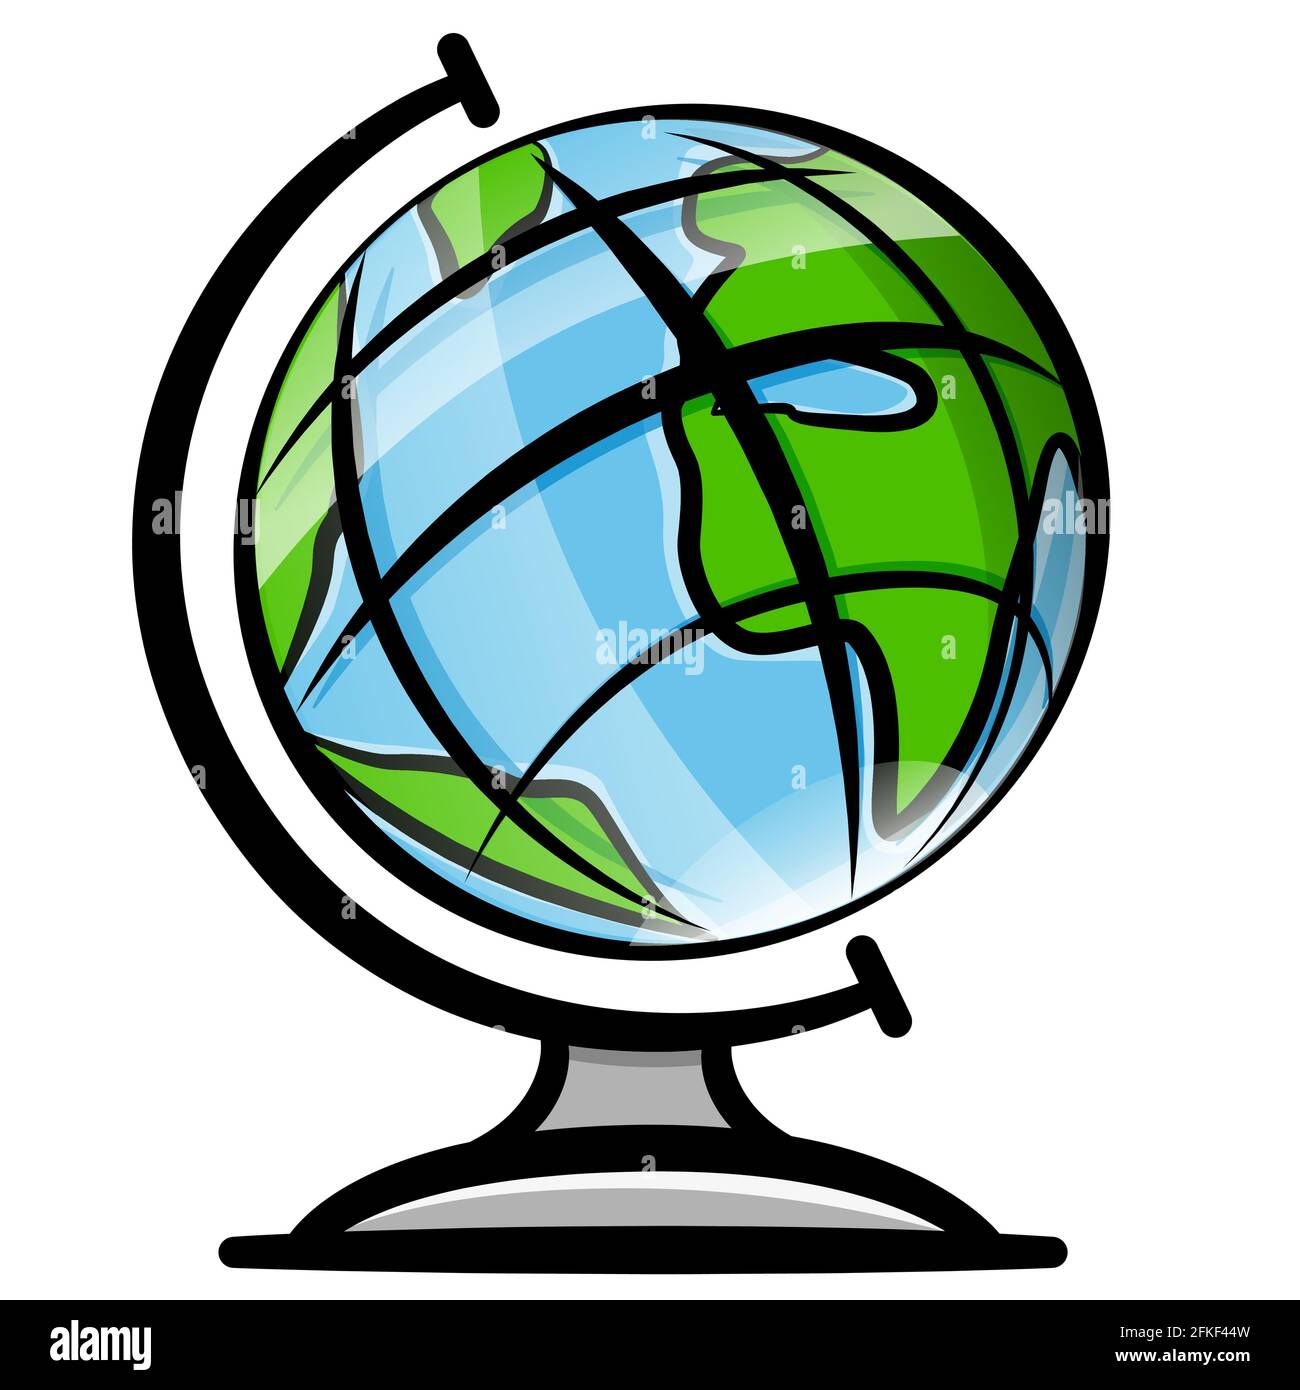 Vektor-Illustration der Welt Globus Cartoon-Design Stock Vektor